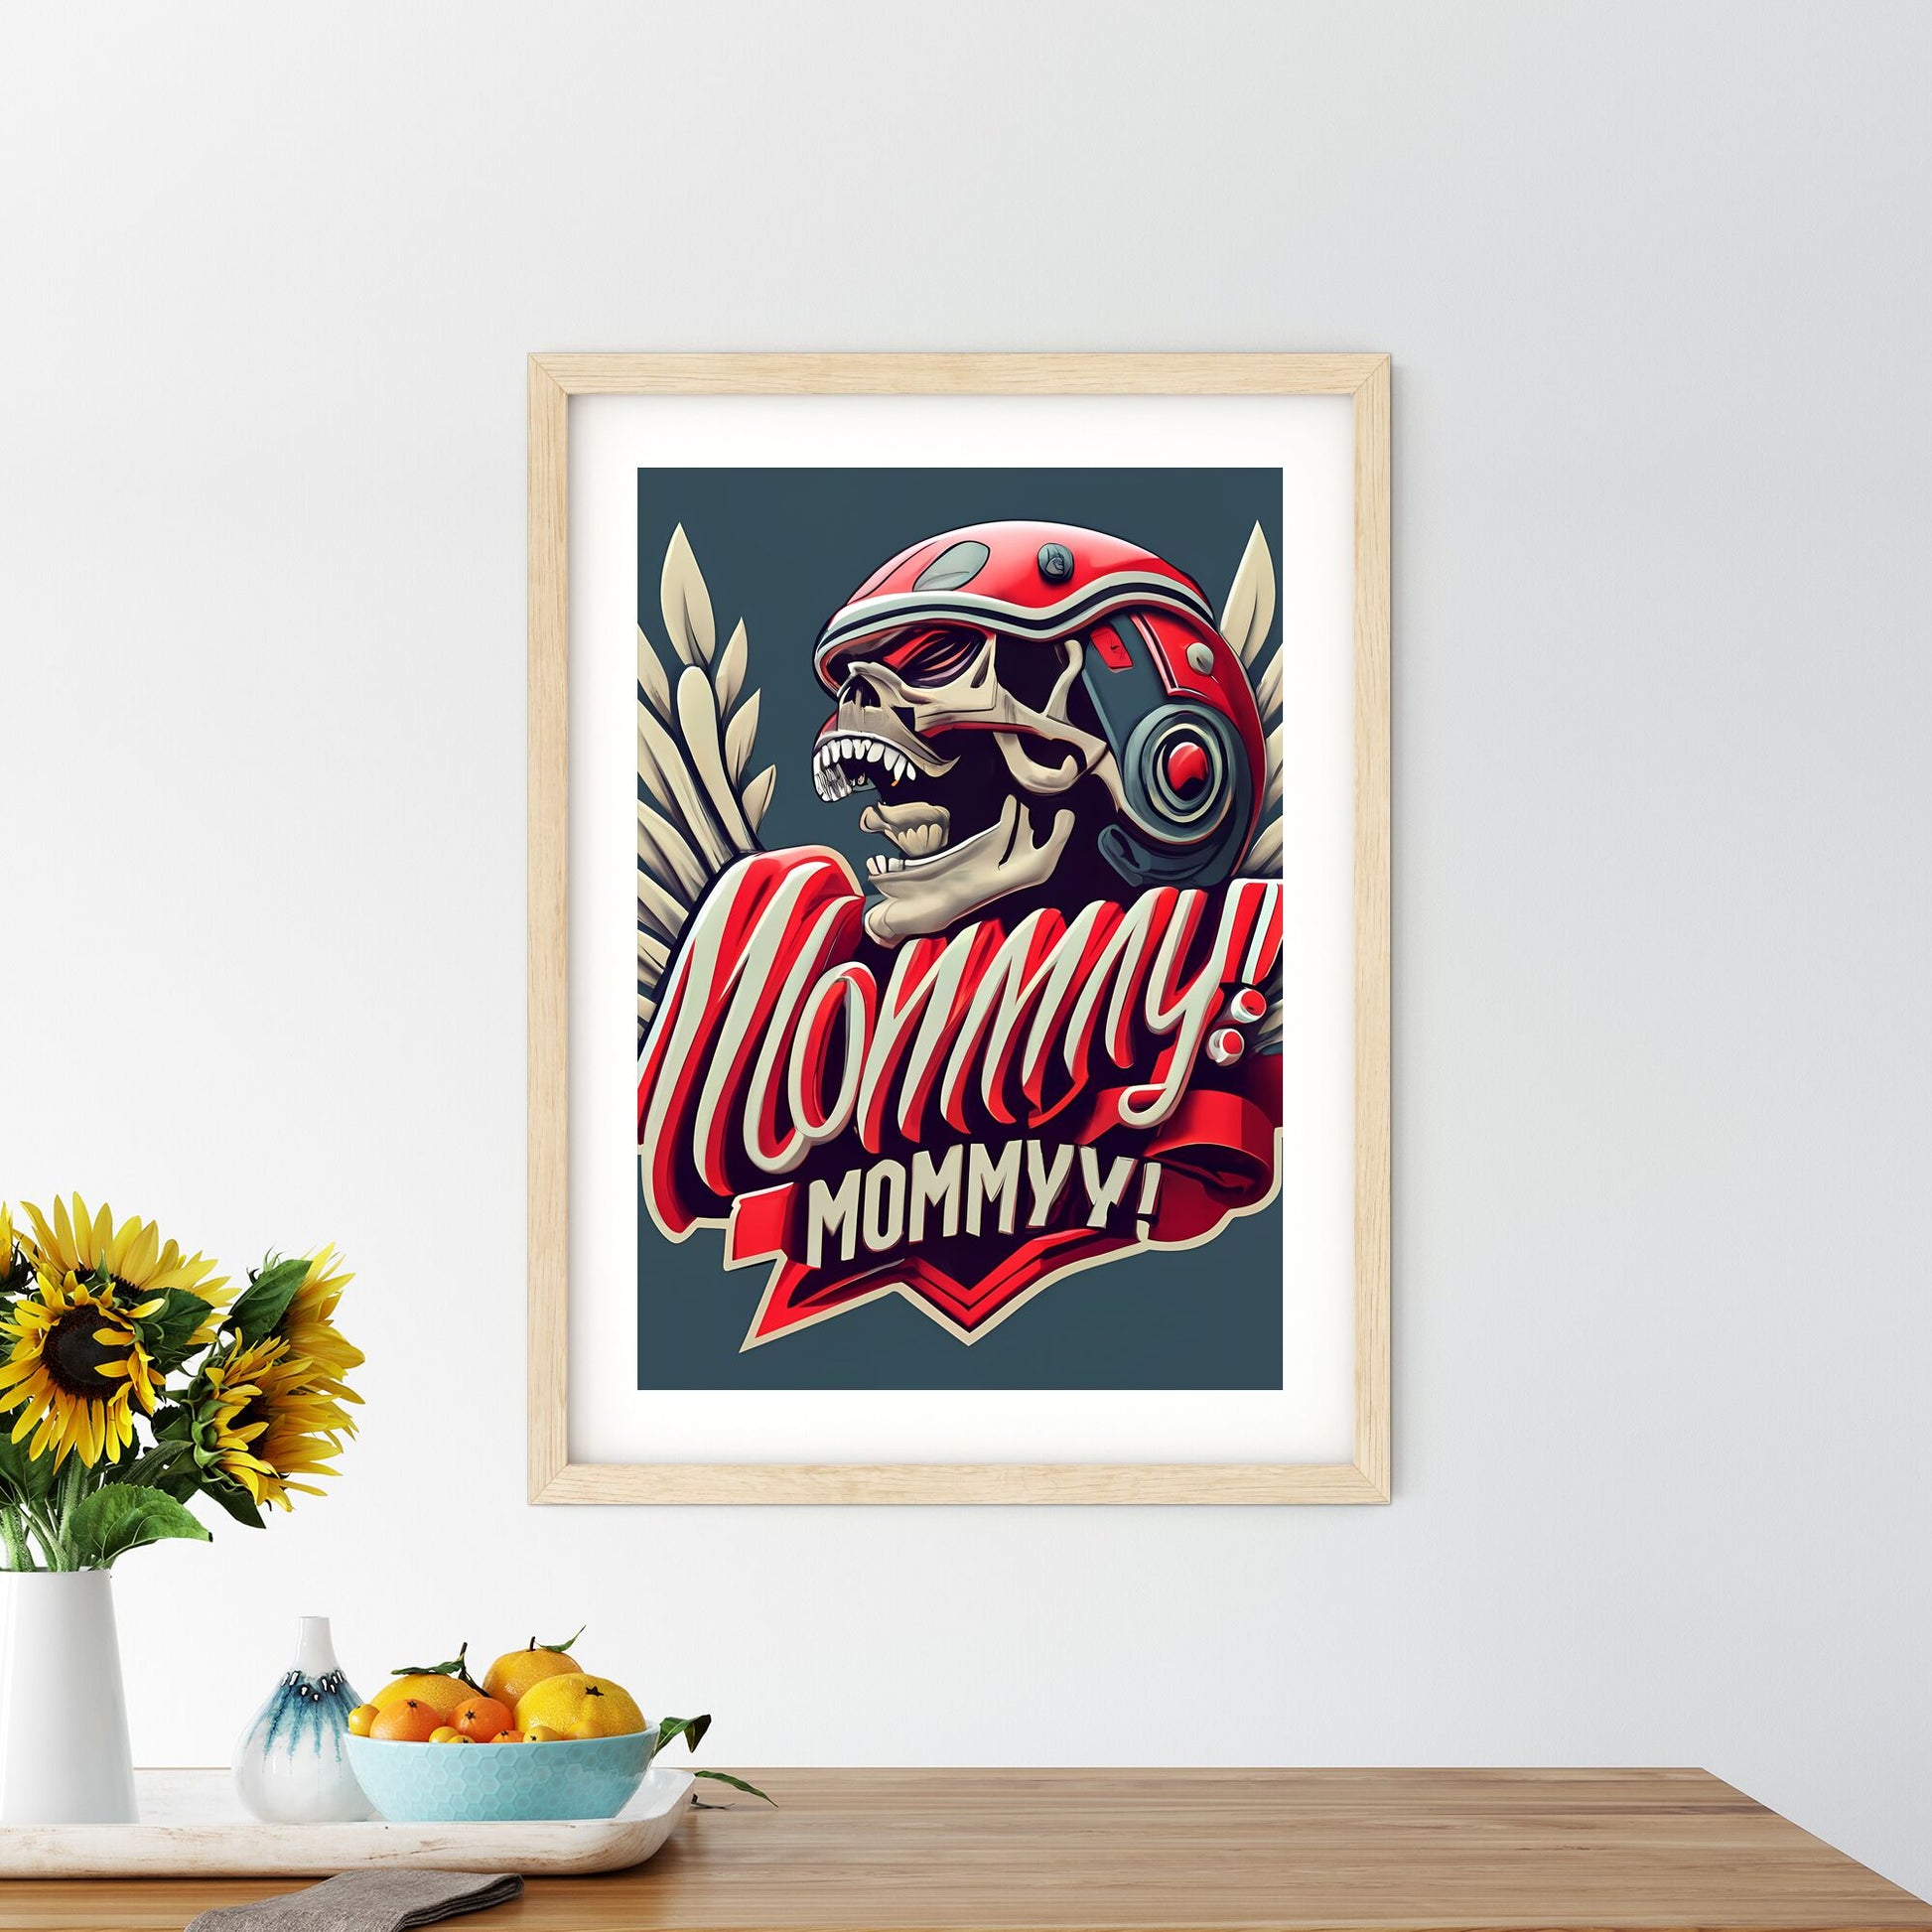 Mommy! Mommyy! - A Skull Wearing A Helmet Art Print Default Title